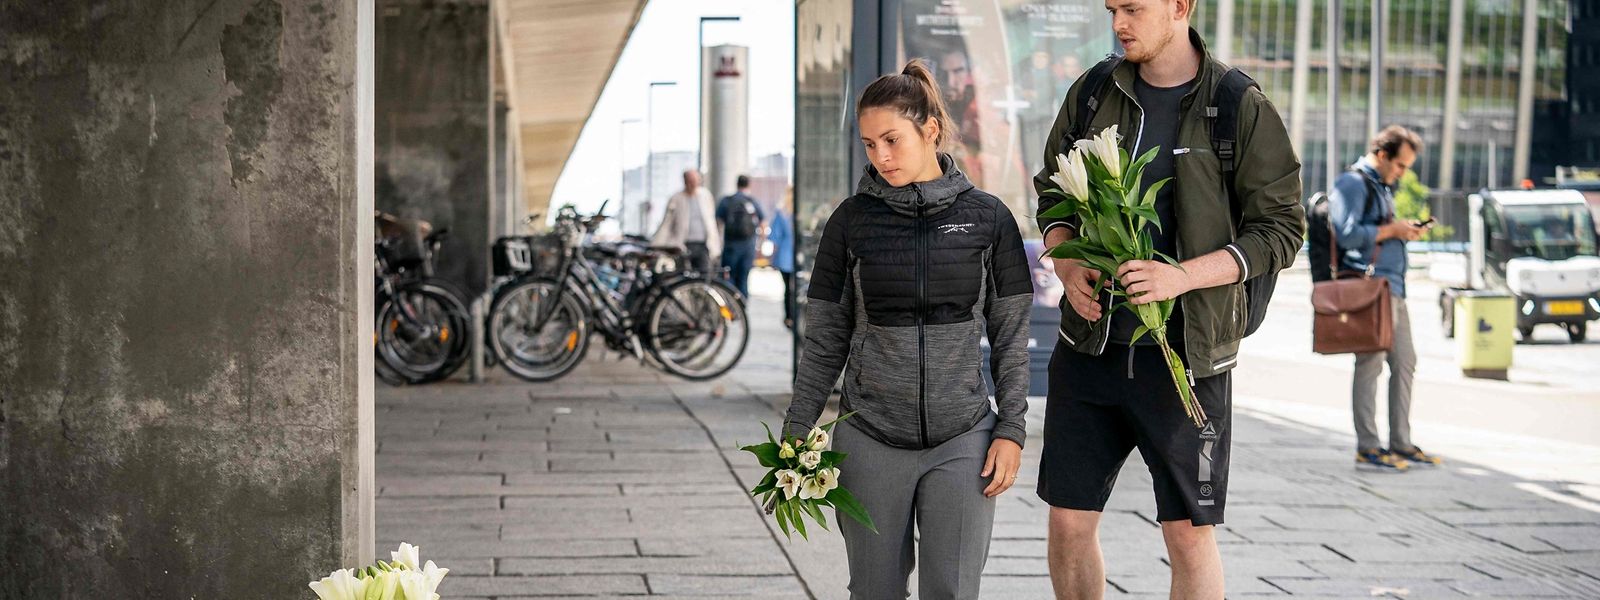 Am Tatort in Kopenhagen legen Menschen Blumen nieder.